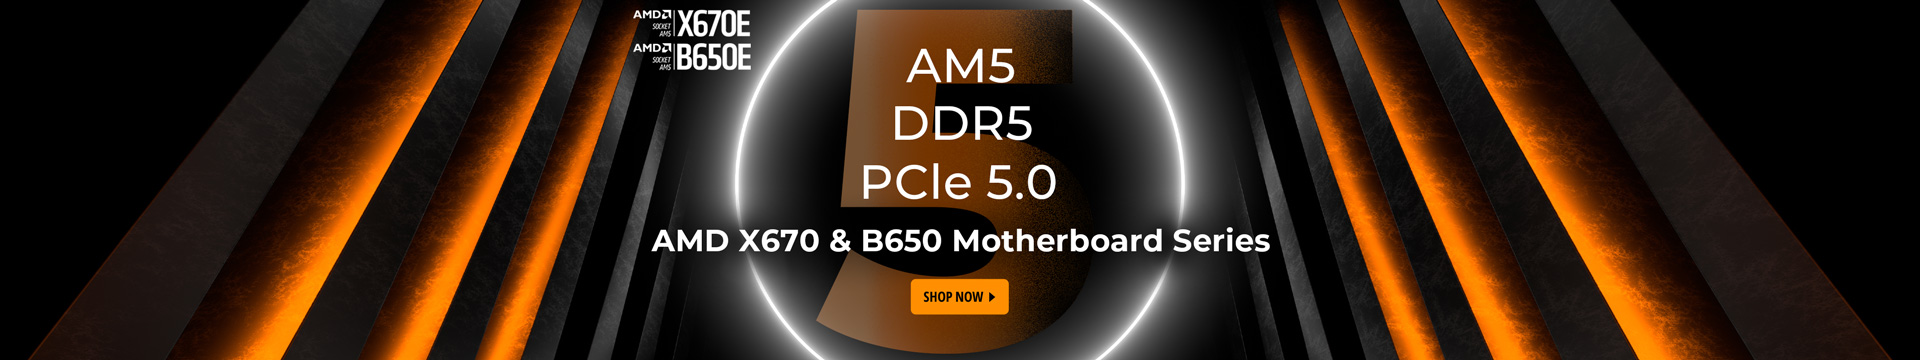 AM5 DDR5 PCle 5.0